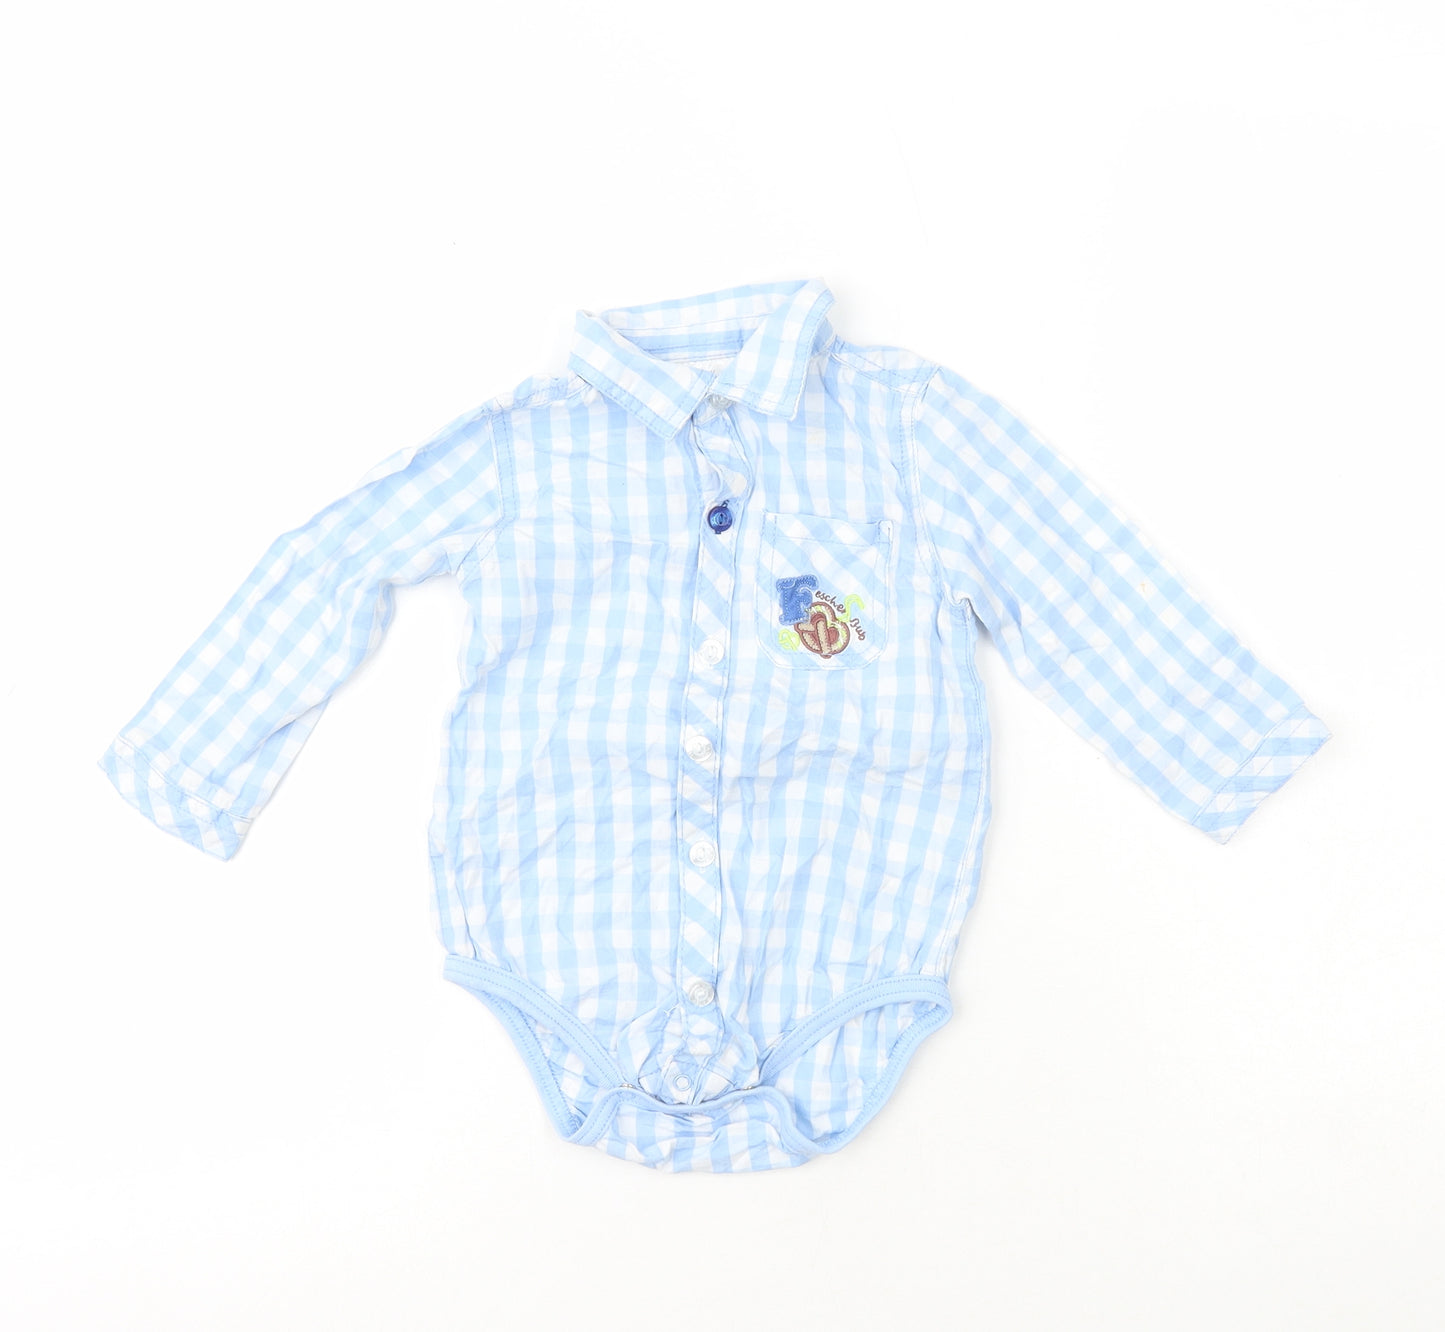 Ergee Boys Blue Plaid 100% Cotton Babygrow One-Piece Size 12-18 Months